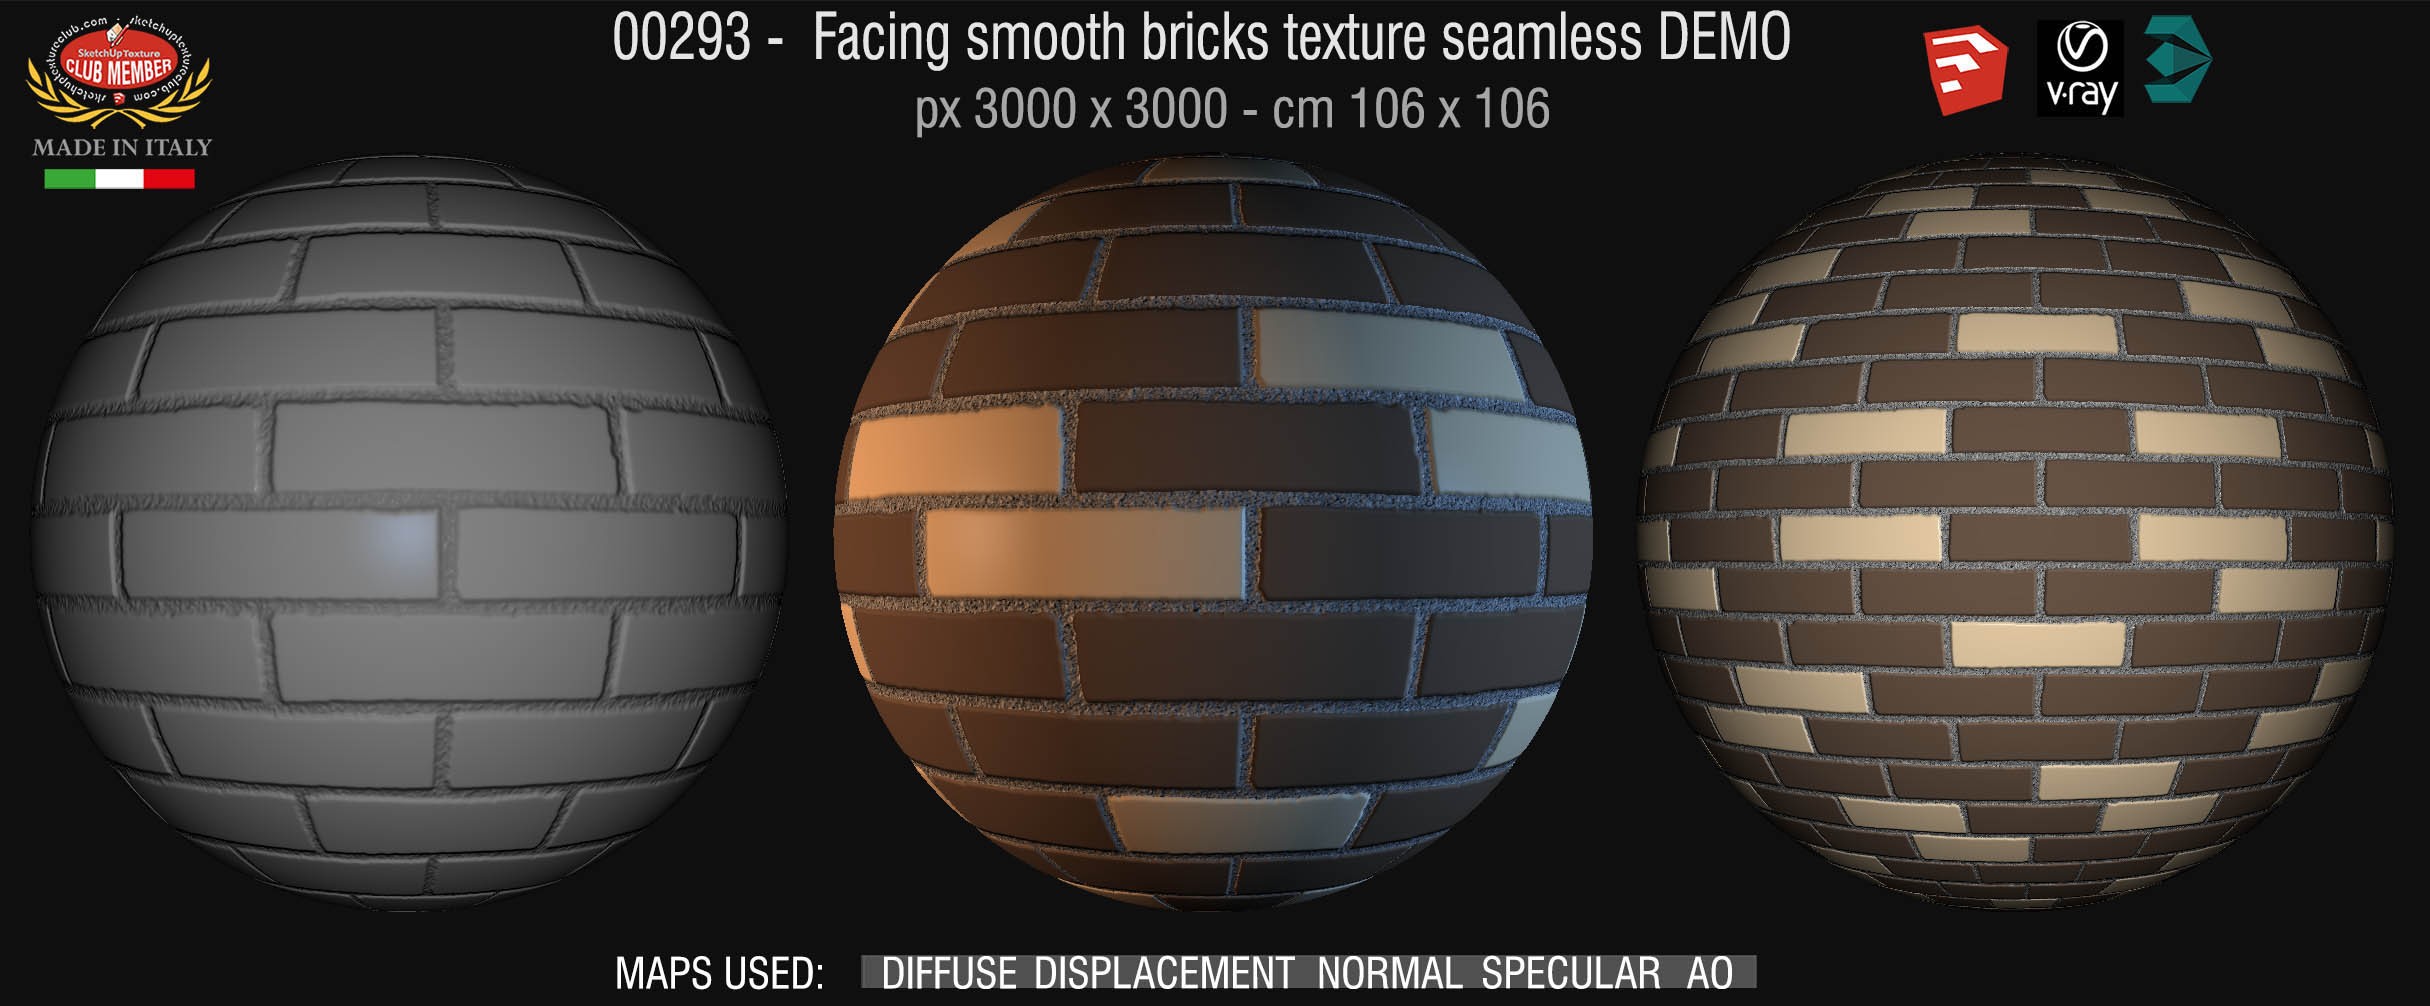 00293 Facing smooth bricks texture seamless + maps DEMO